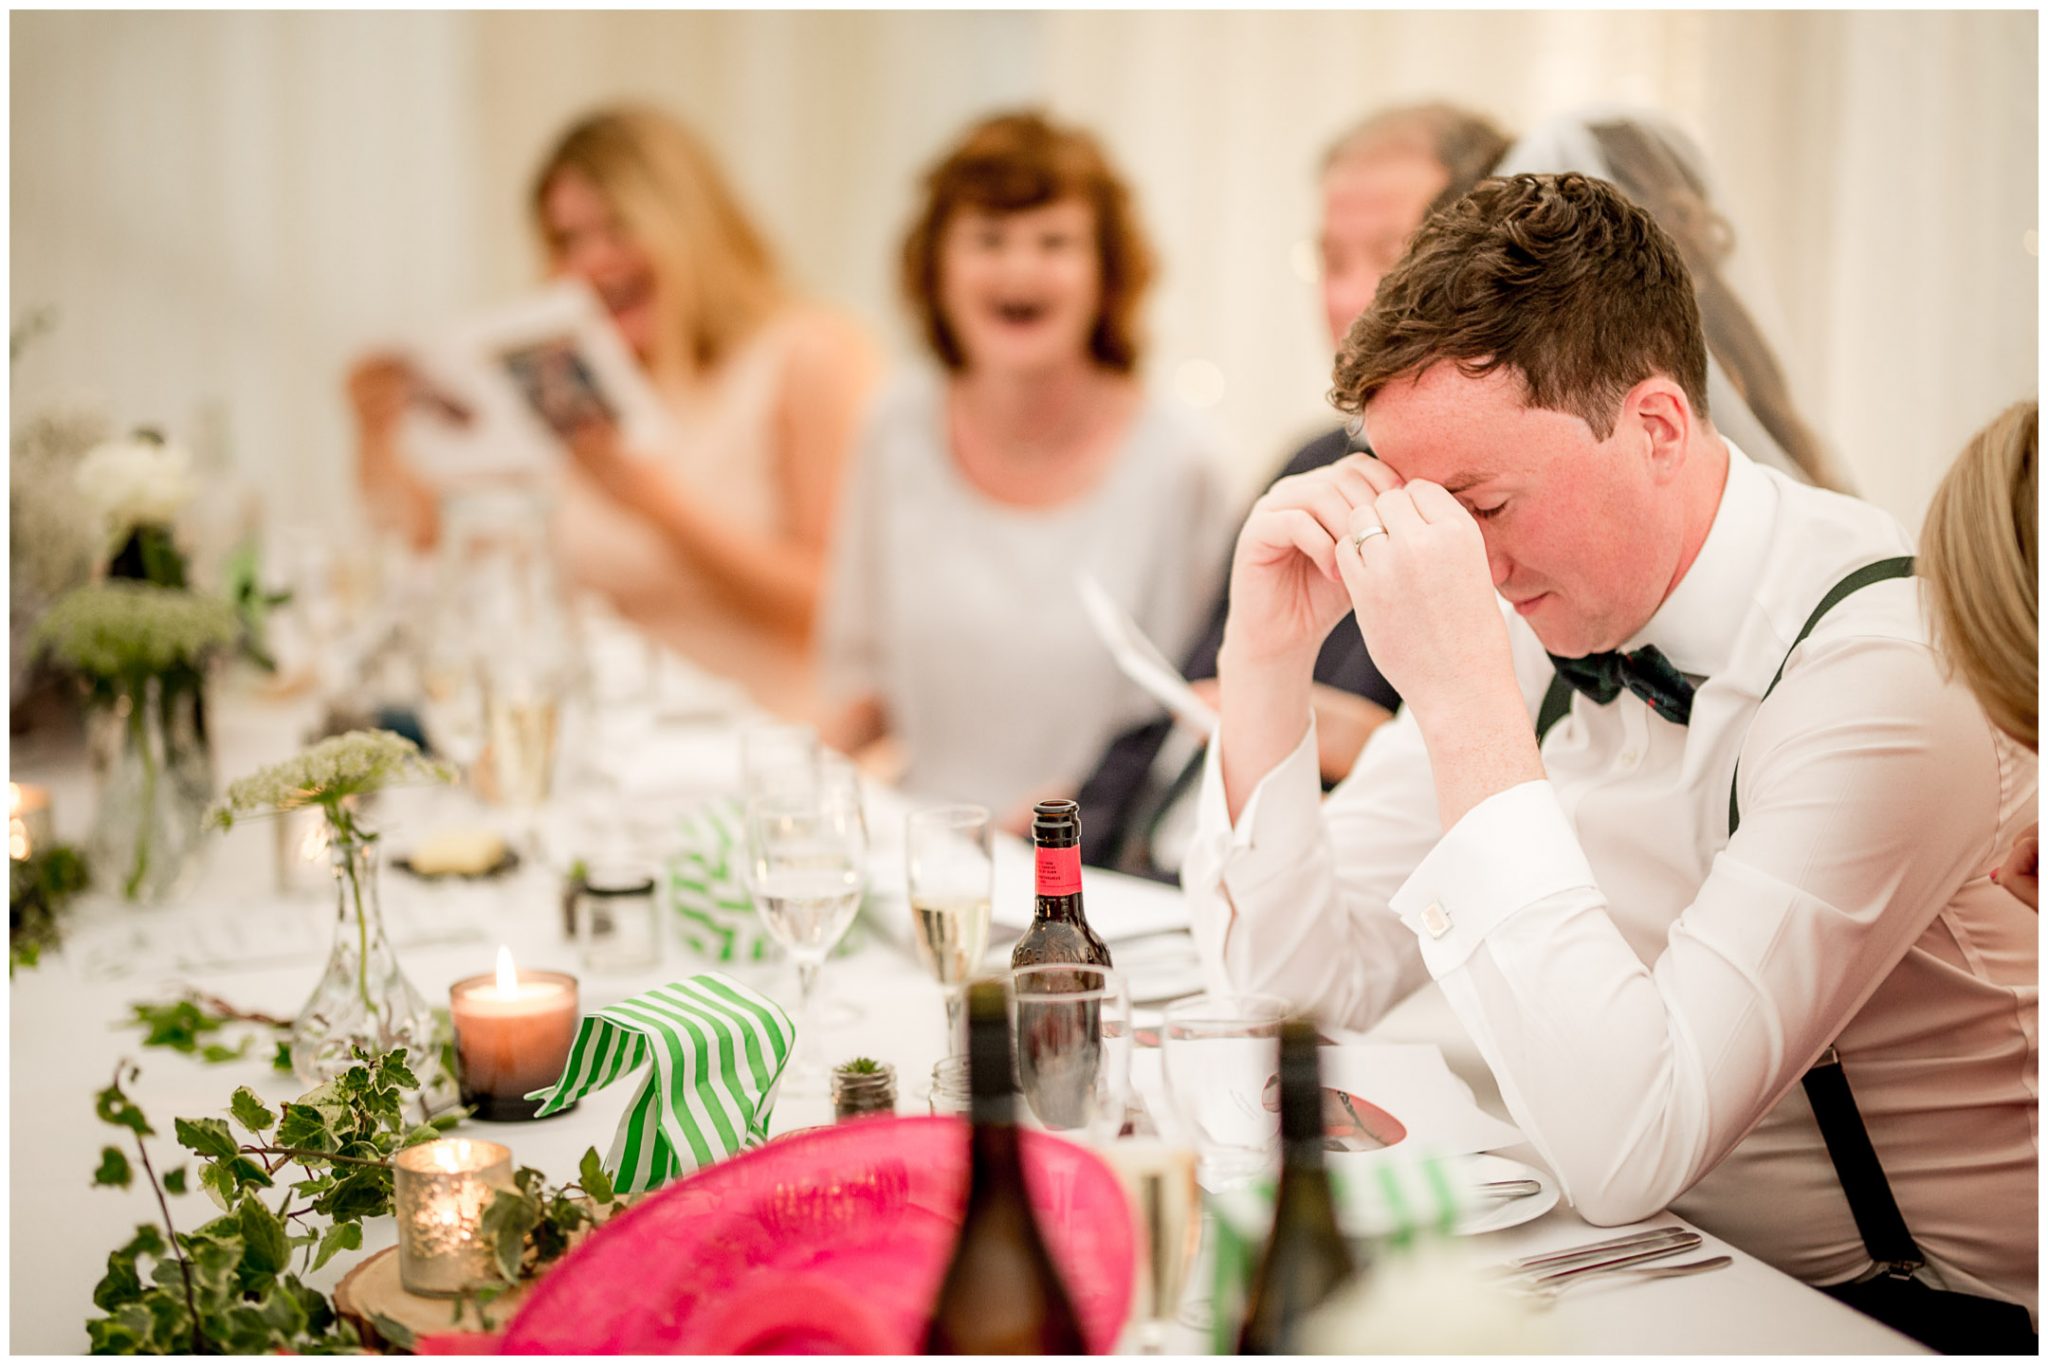 Reality kicks in for the groom as his best men begin their speech